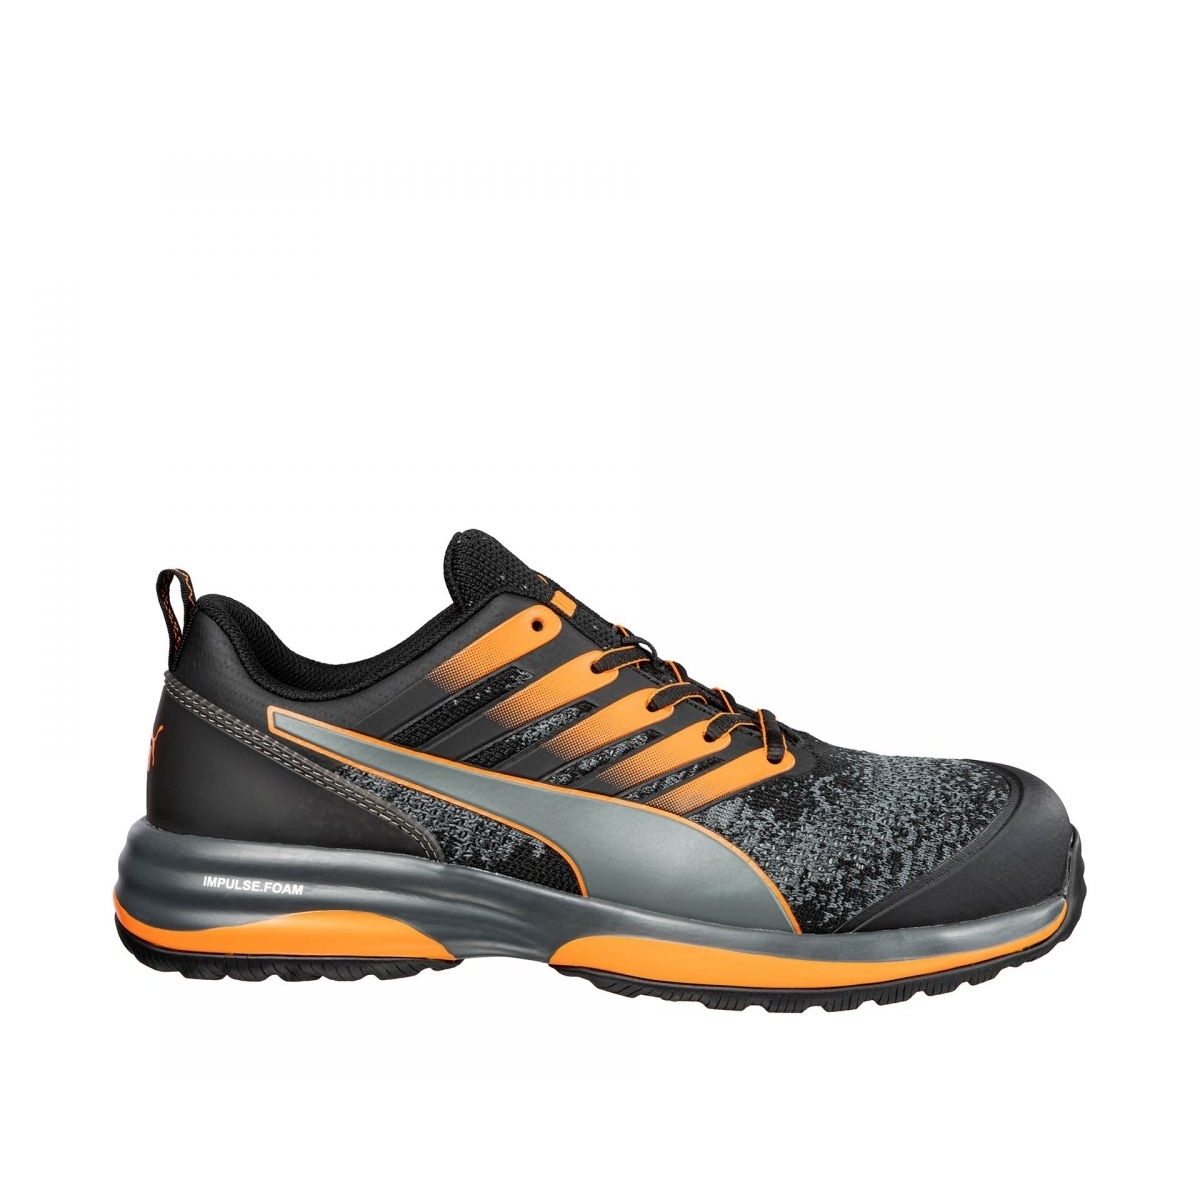 PUMA Safety Men's Charge Low Composite Toe EH Work Shoes Orange - 644555-294 ORANGE - ORANGE, 11.5